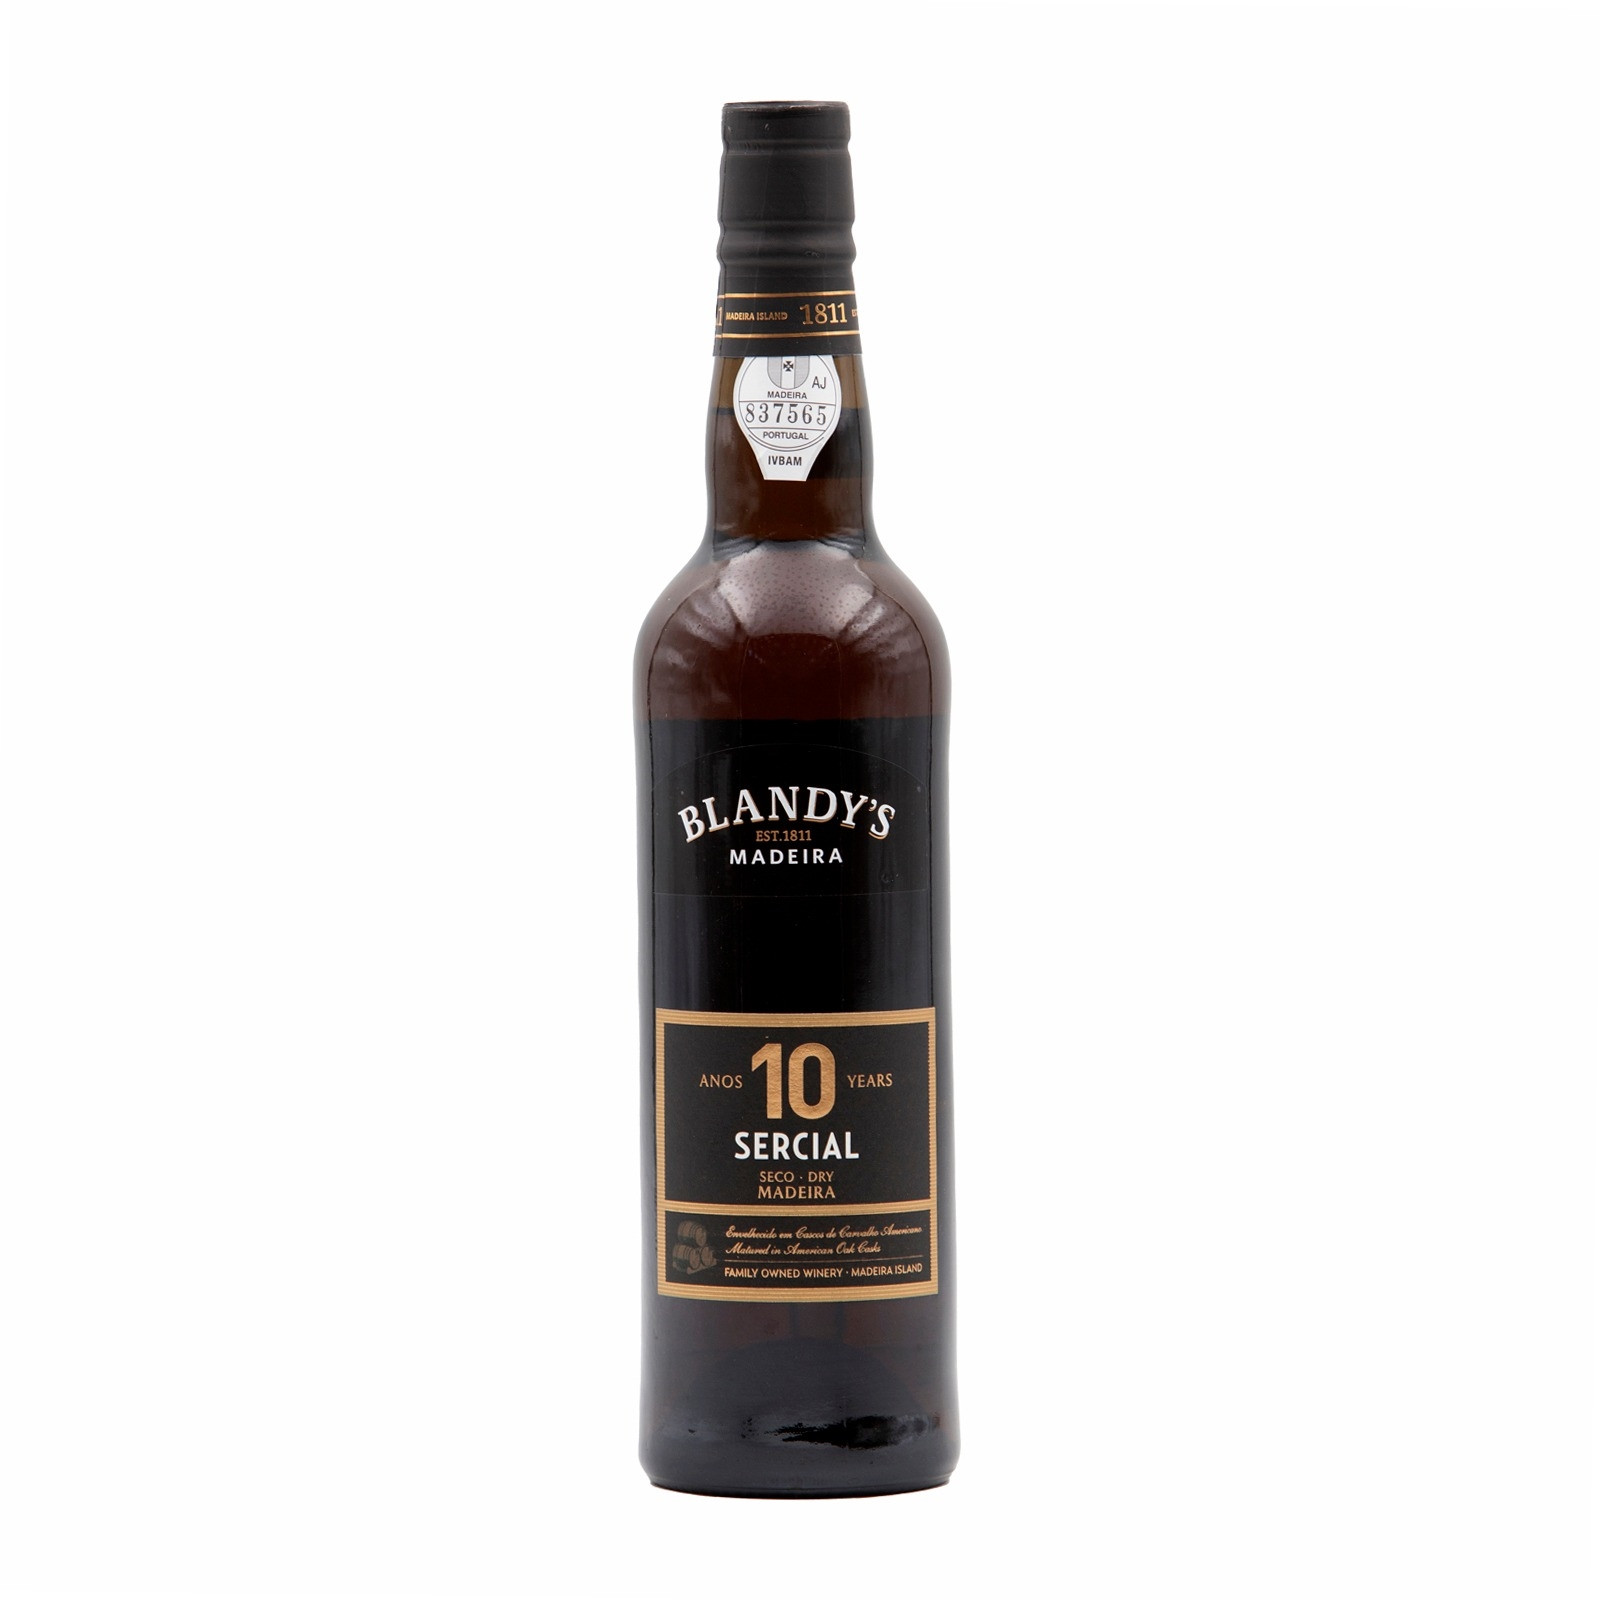 Blandys 10 anni Sercial Madeira